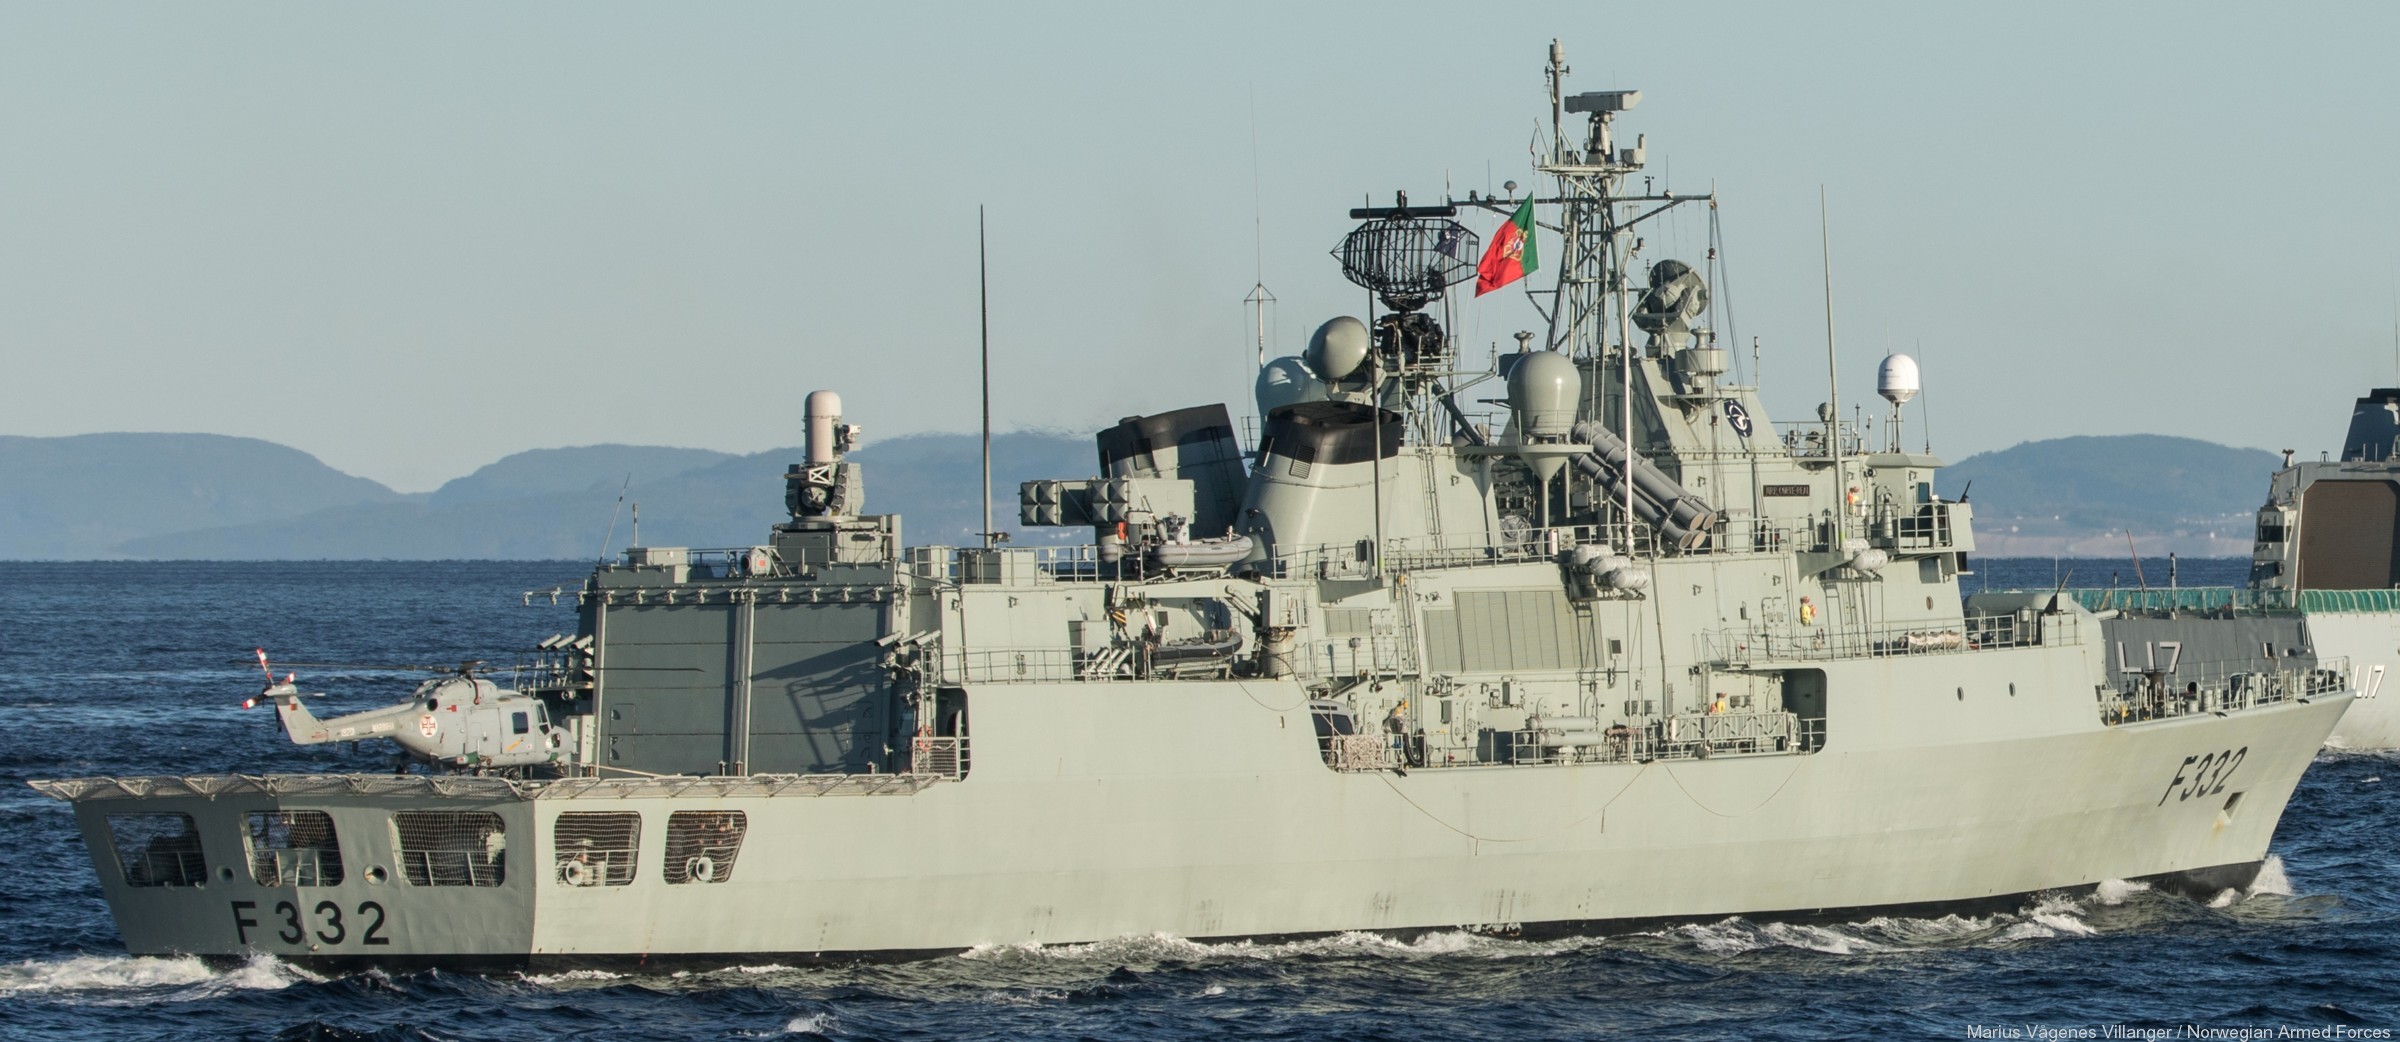 vasco da gama class meko 200pn frigate portuguese navy f-332 nrp corte real 03x